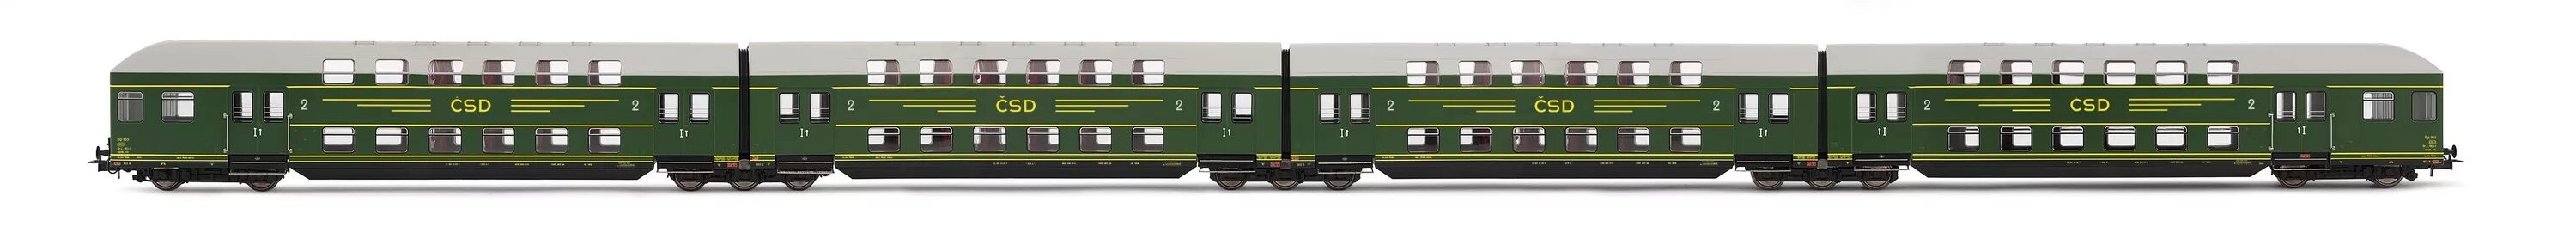 11 5 1 87. Train model 1:87 ho Double-Decker ic2. Hornby поезд масштаб 1:120 поезд. Lsm 47286 вагон почтовый z Post SBB Epoche vi 1/87. Double Decker Train Flat.